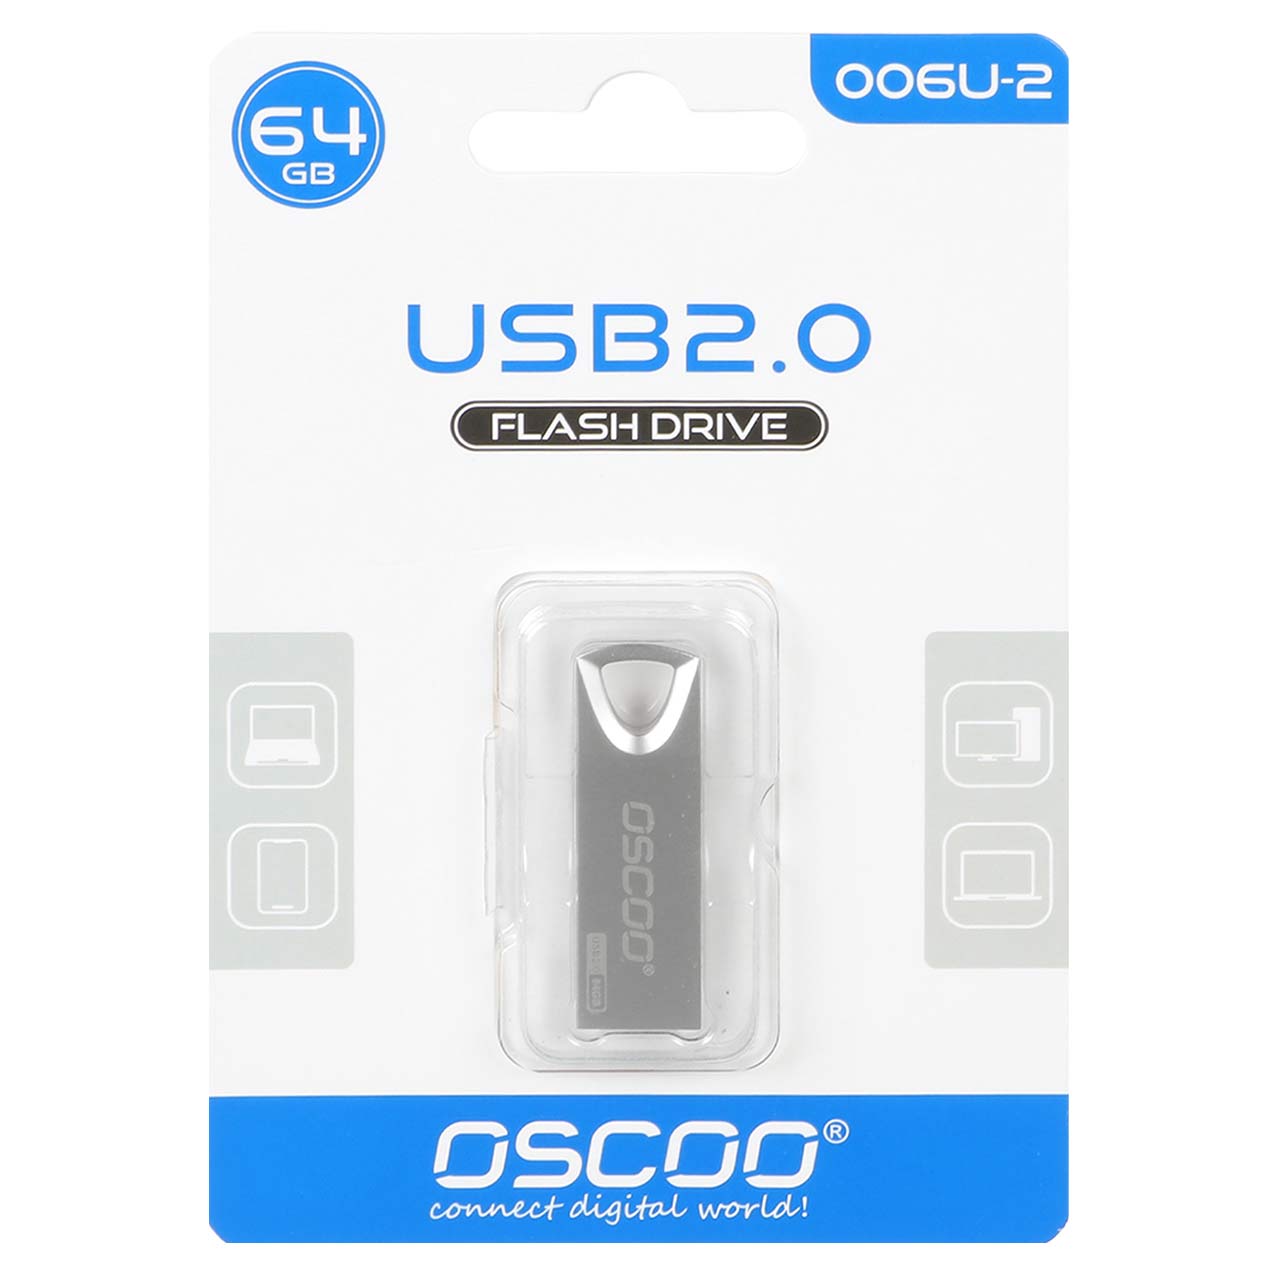 OSCOO 006U-2 USB2.0 Flash Memory-64GB نقره ای